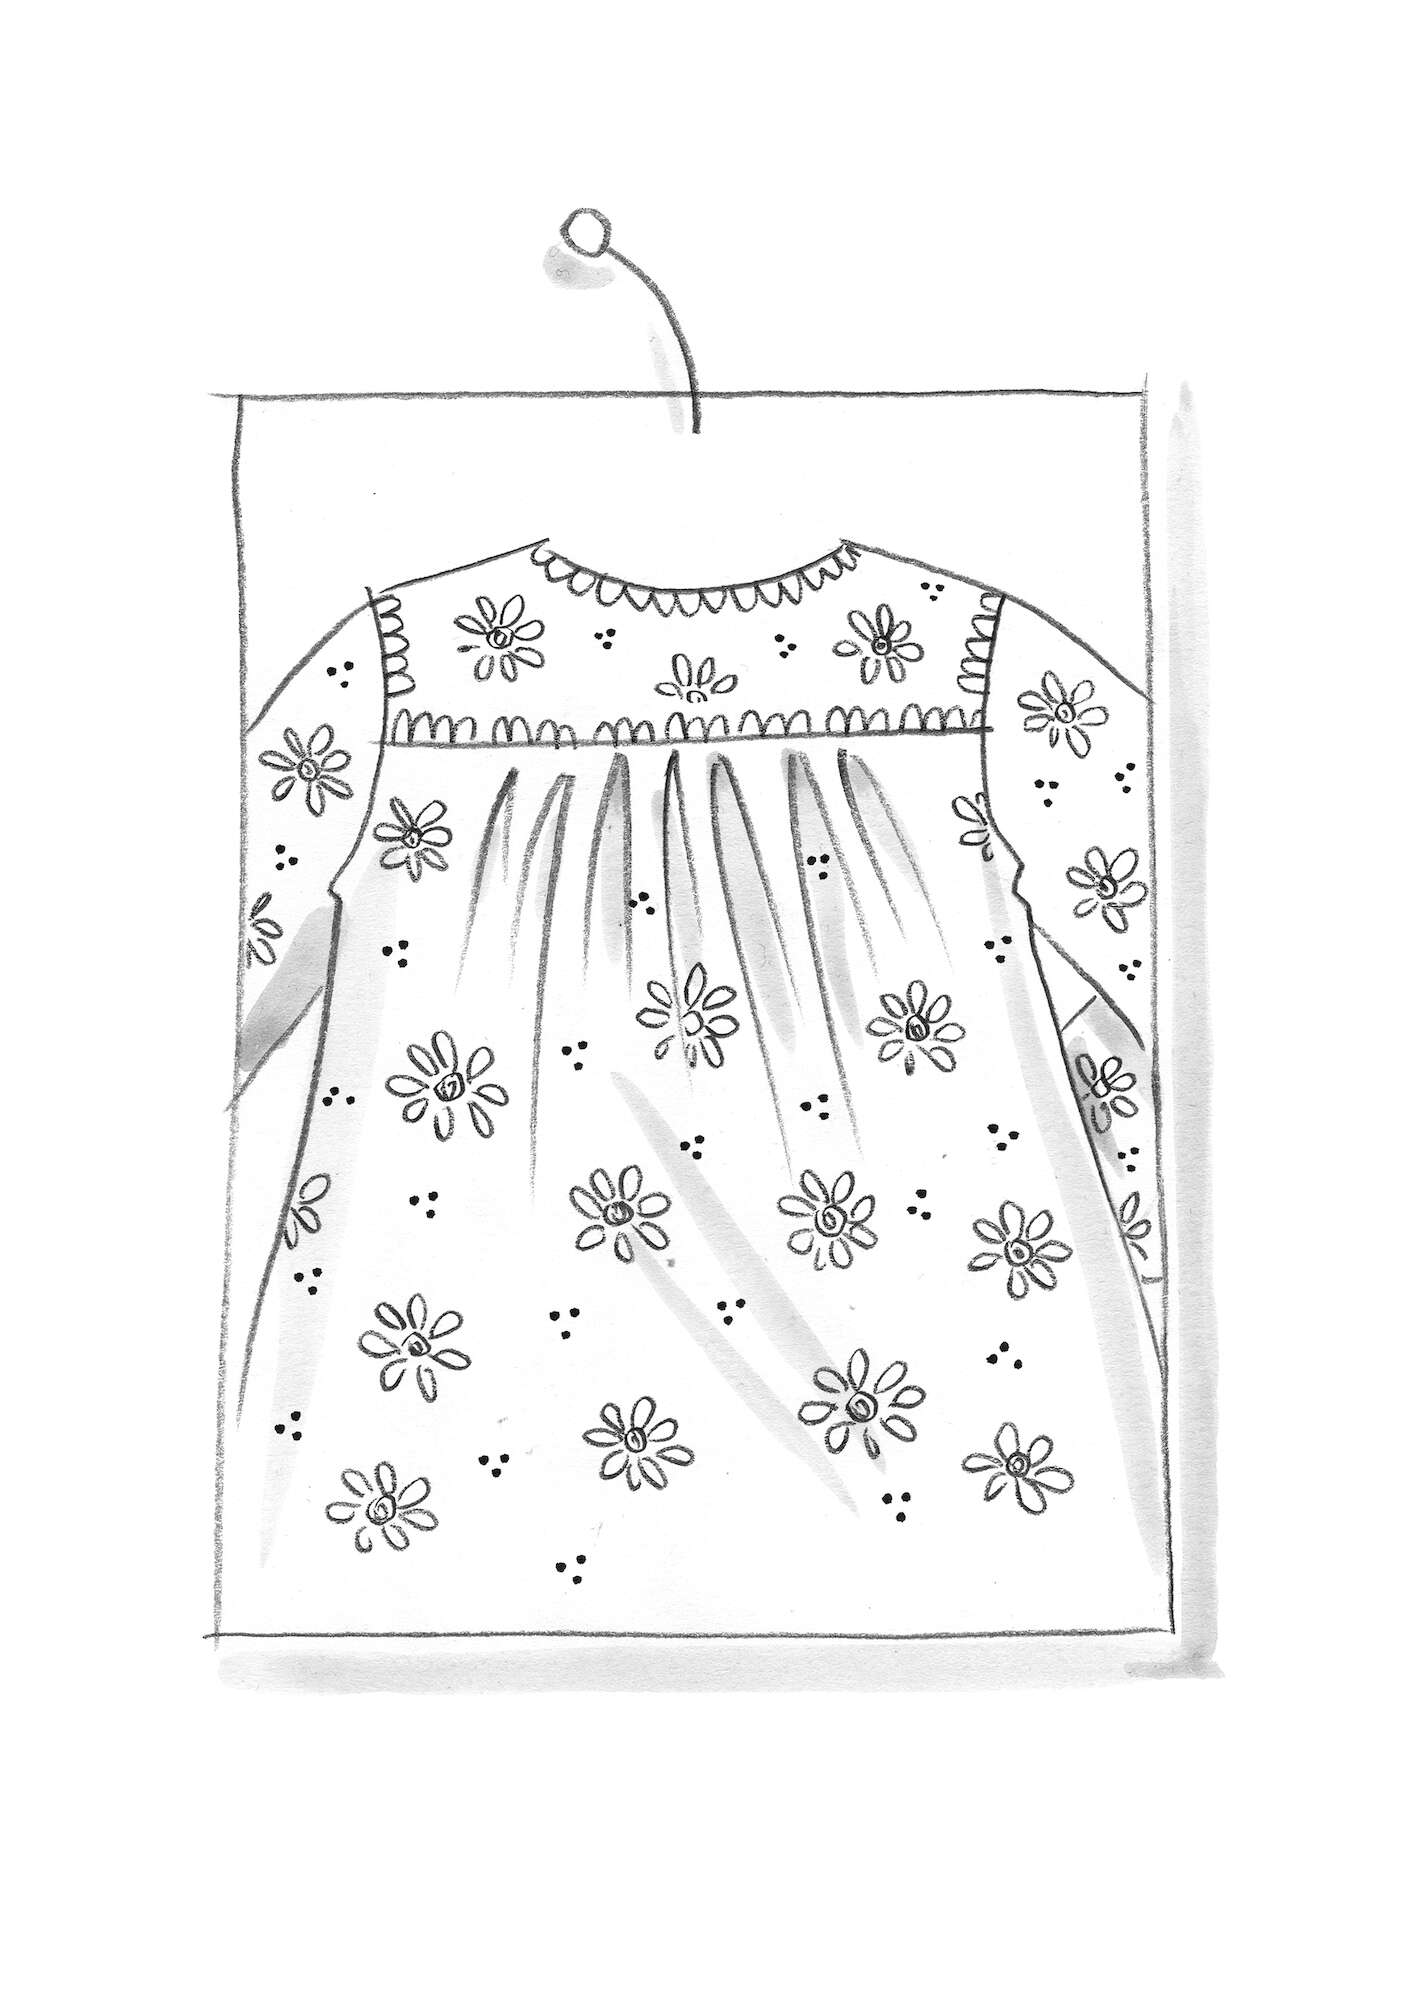 “Ester” woven blouse in linen malachite/patterned